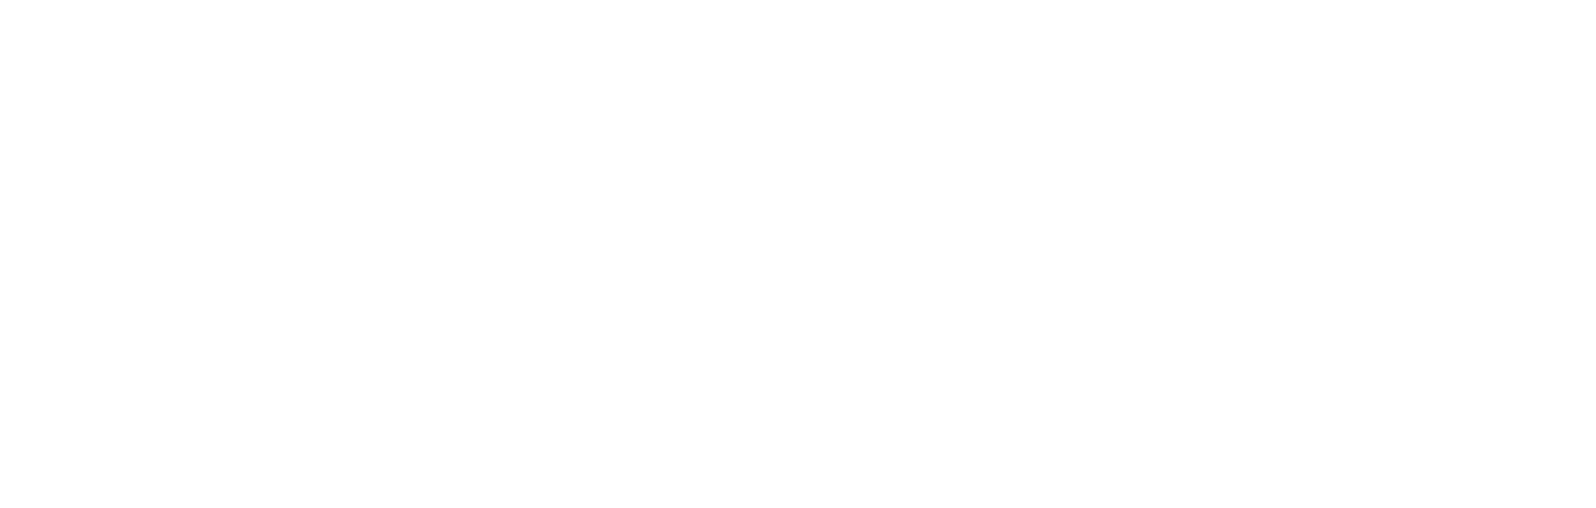 Jasper Therapeutics logo large for dark backgrounds (transparent PNG)